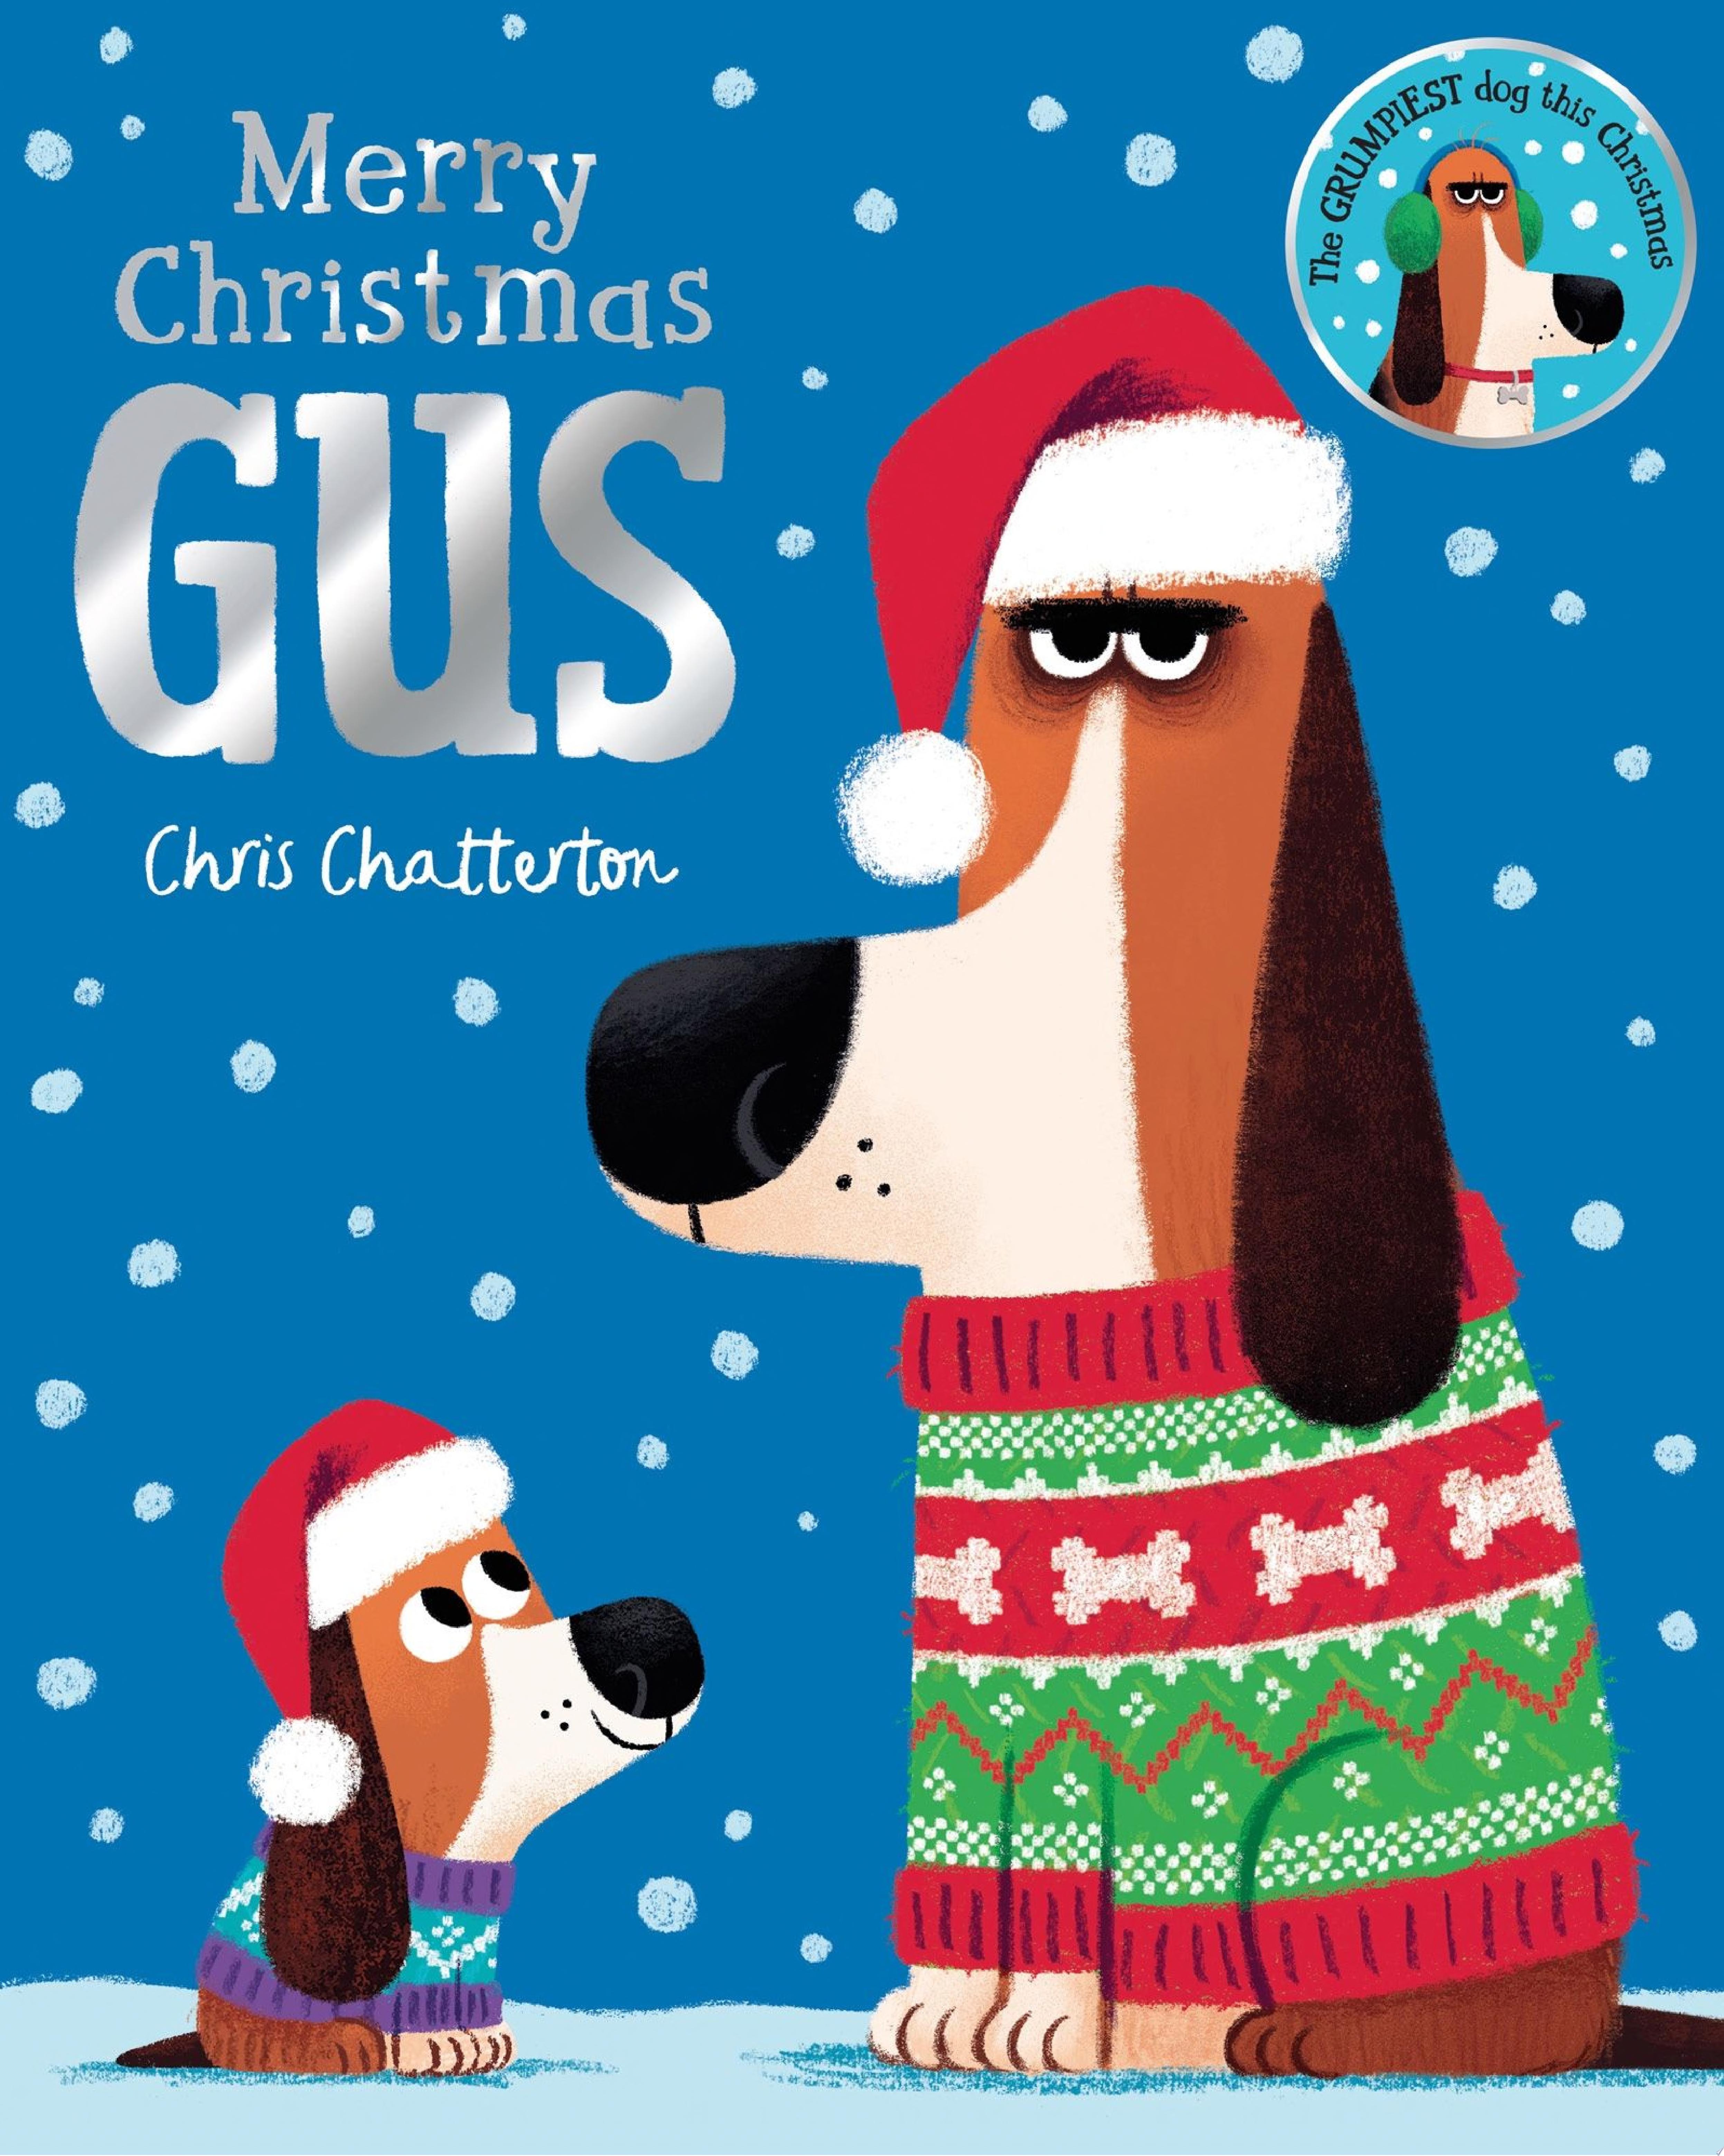 Image for "Merry Christmas, Gus"